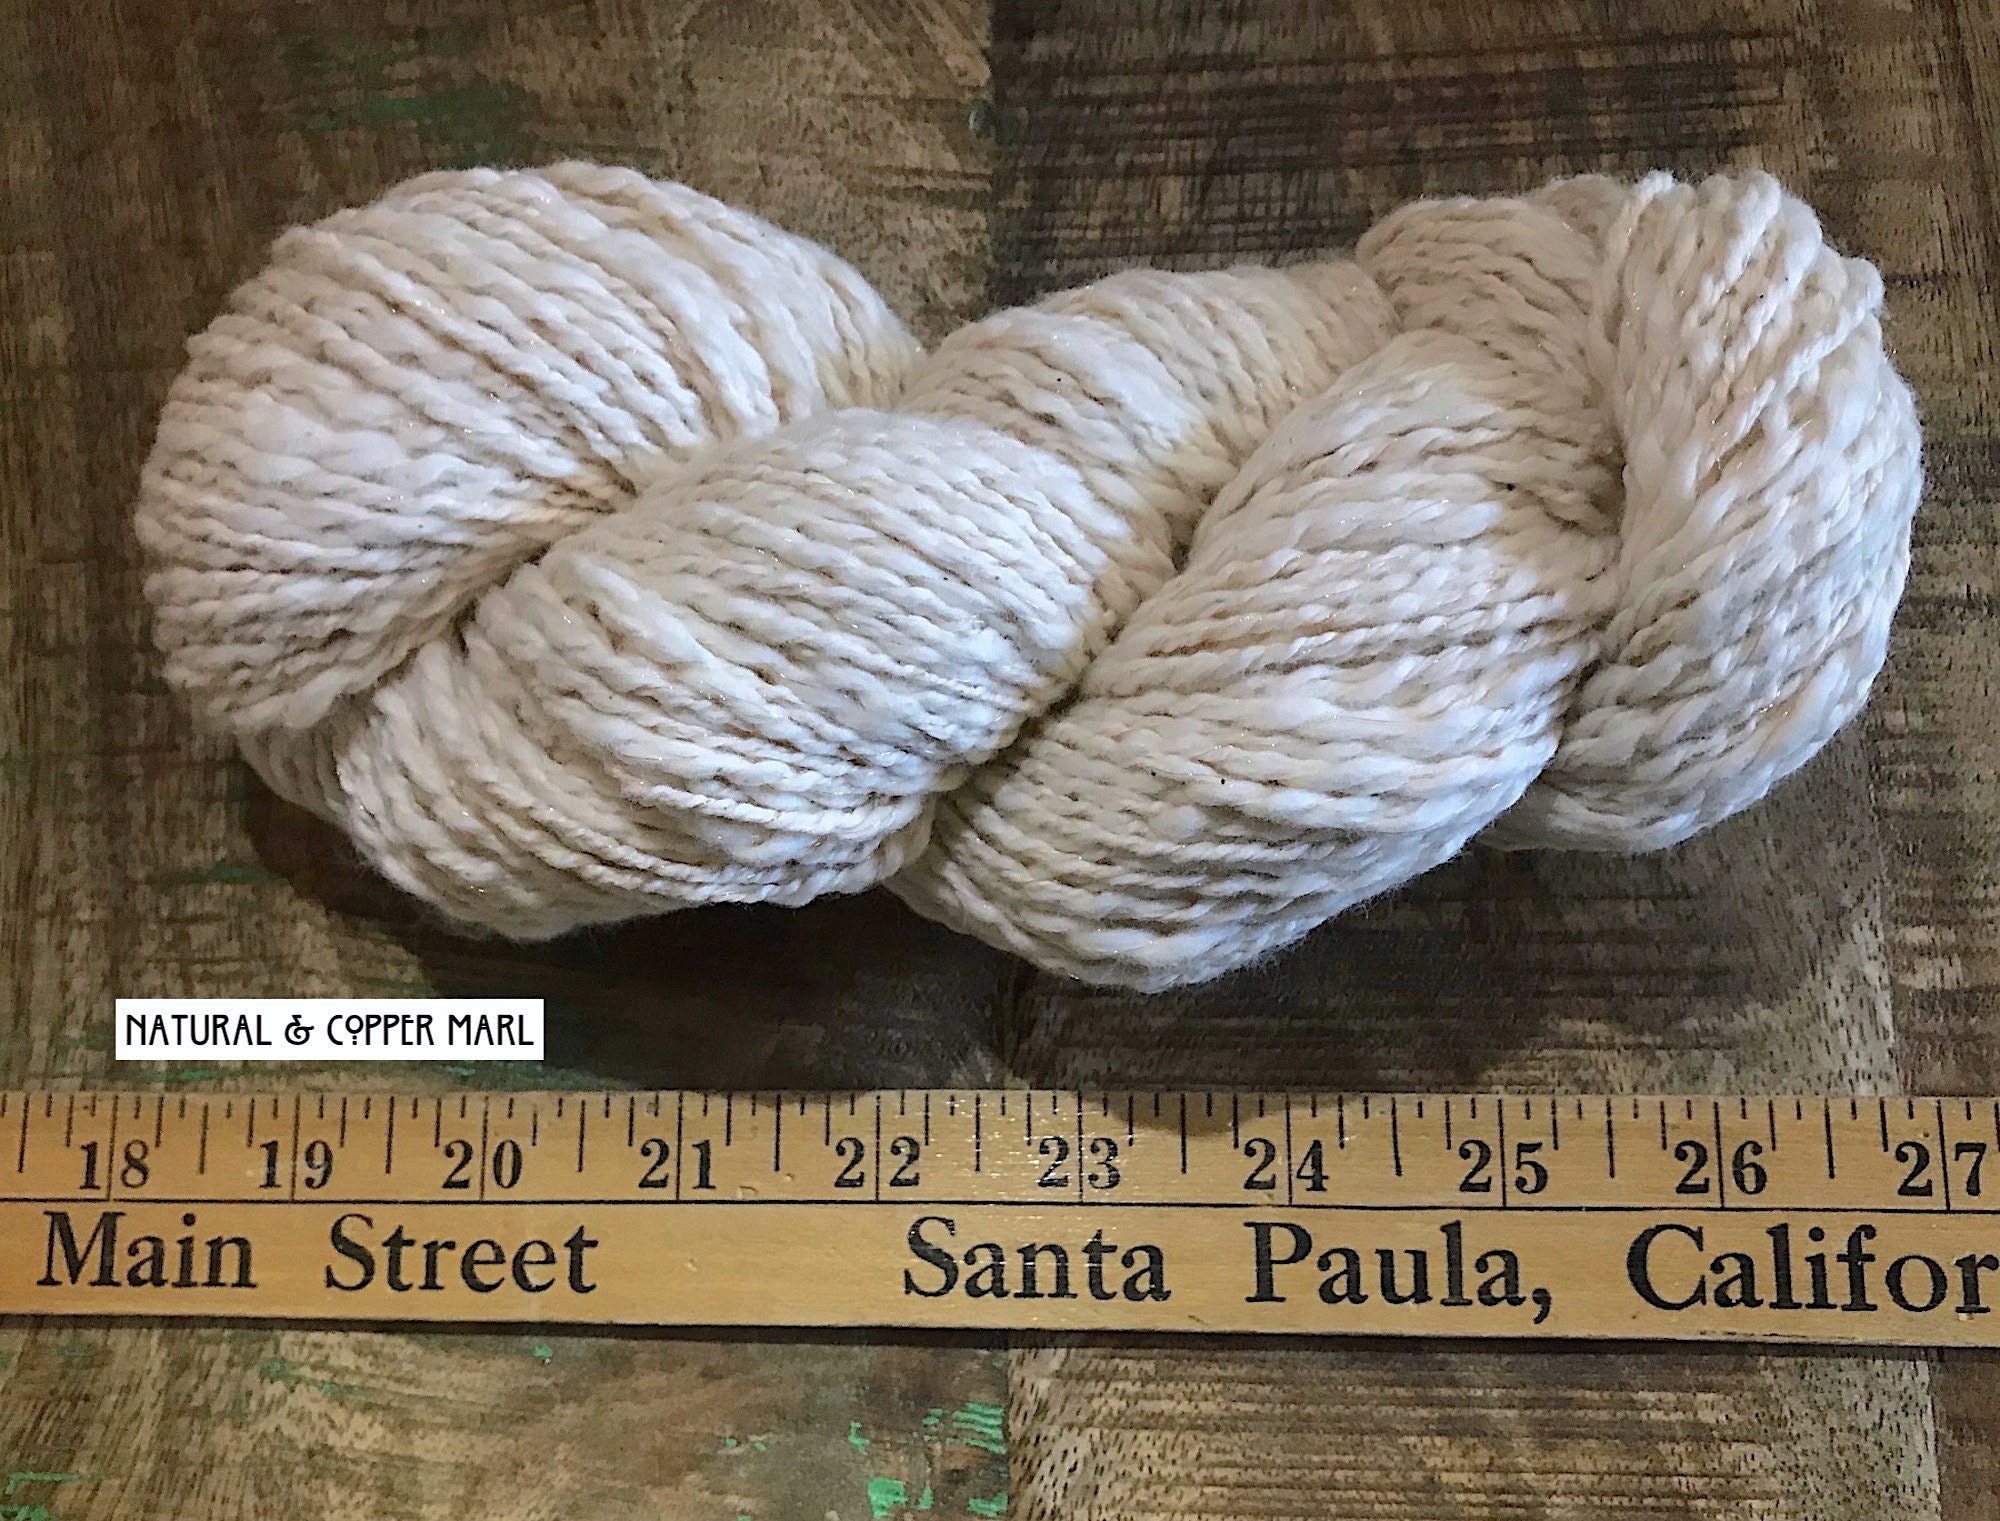 Pakucho Worsted Organic Cotton yarn in Rustic Avocado at Fabulous Yarn